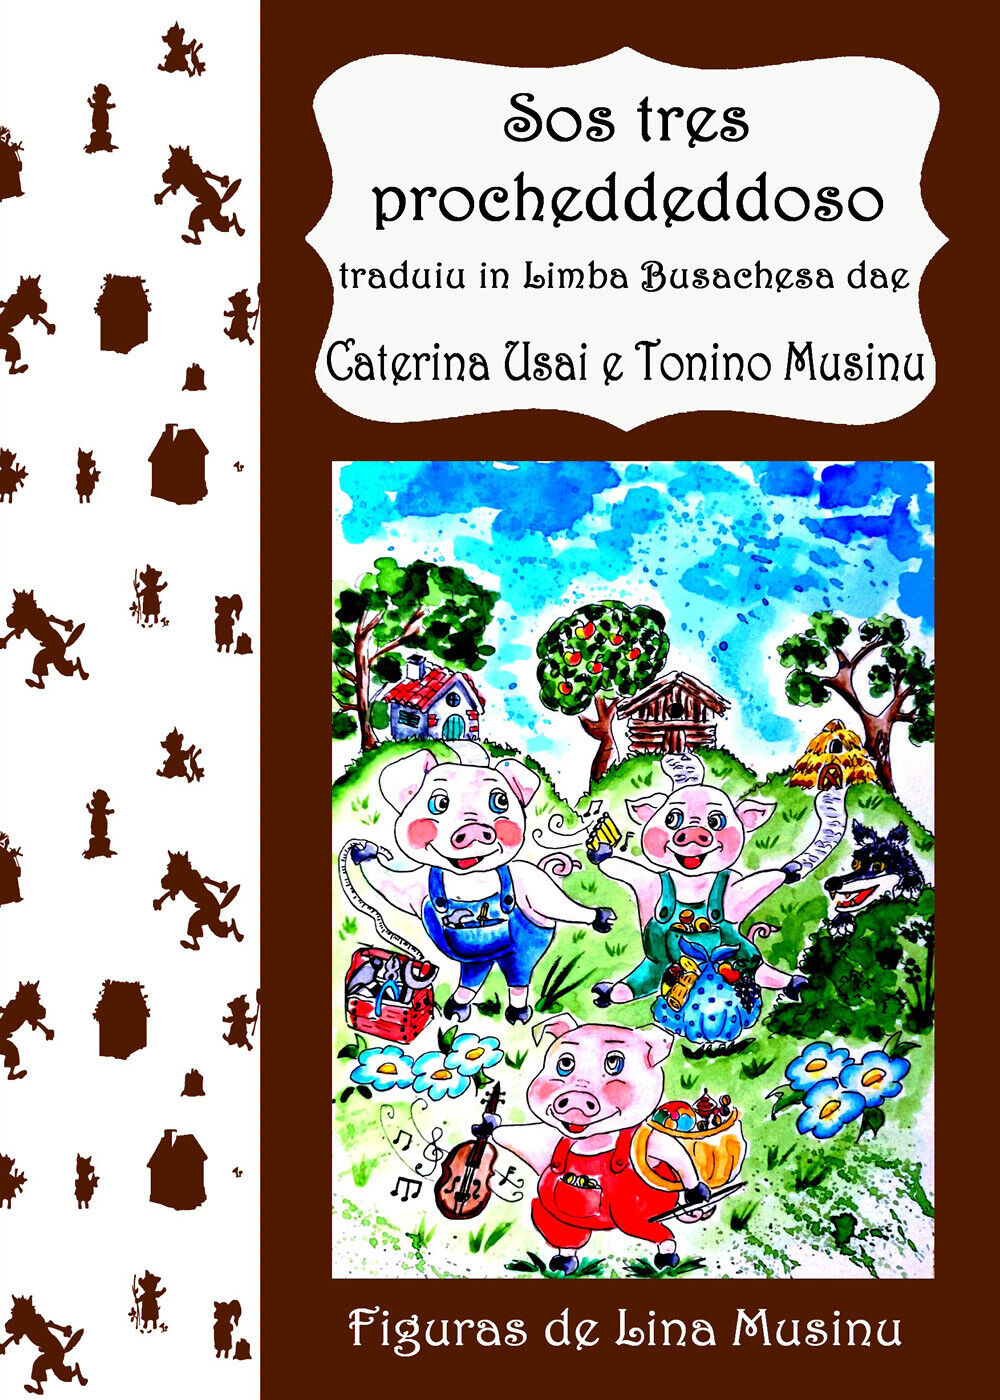 Sos tres procheddeddoso di Caterina Usai - Tonino Musinu,  2021,  Youcanprint libro usato